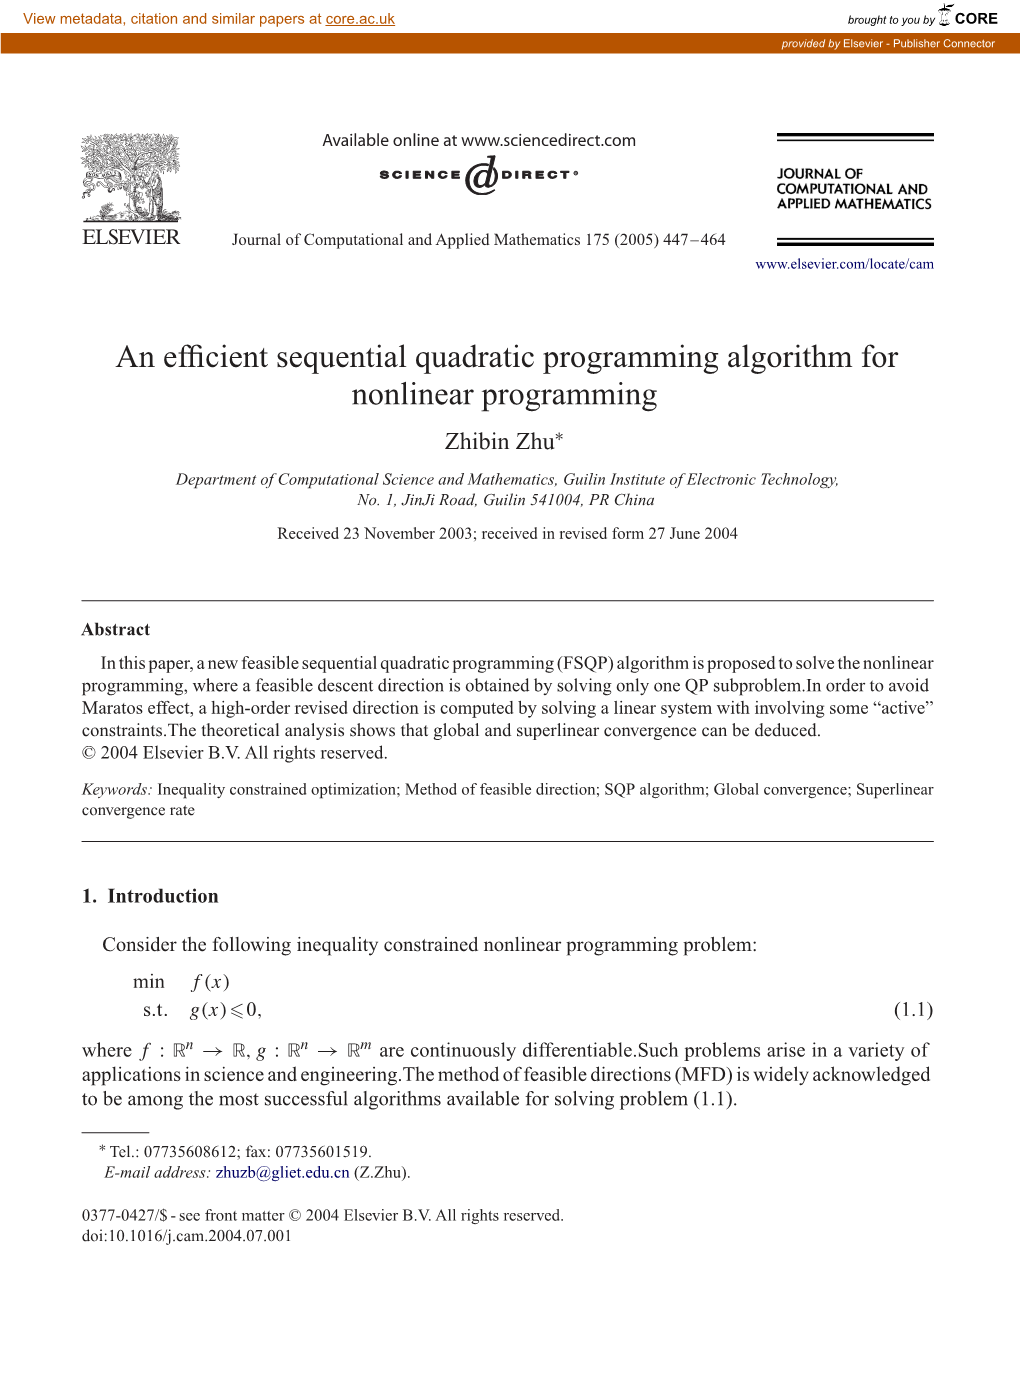 An Efficient Sequential Quadratic Programming Algorithm For